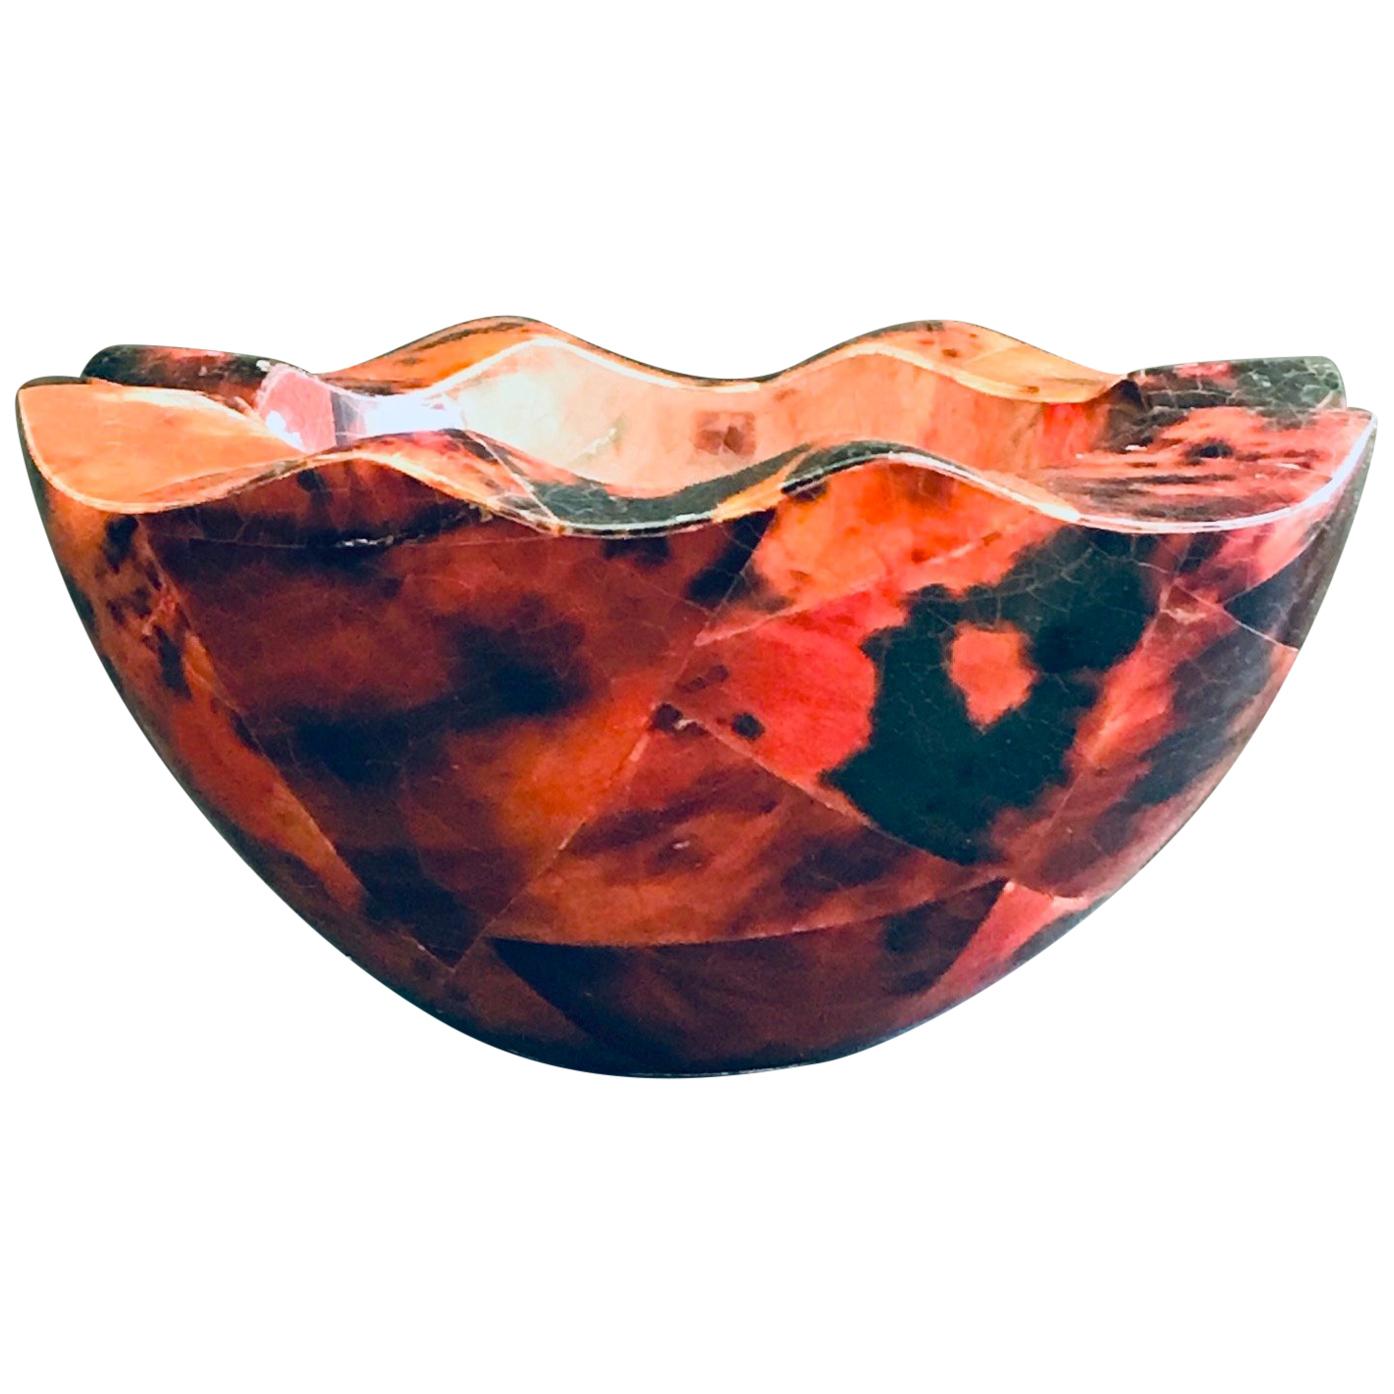 Organic Modern Pen-Shell Bowl with Mosaic Inlays by R&Y Augousti